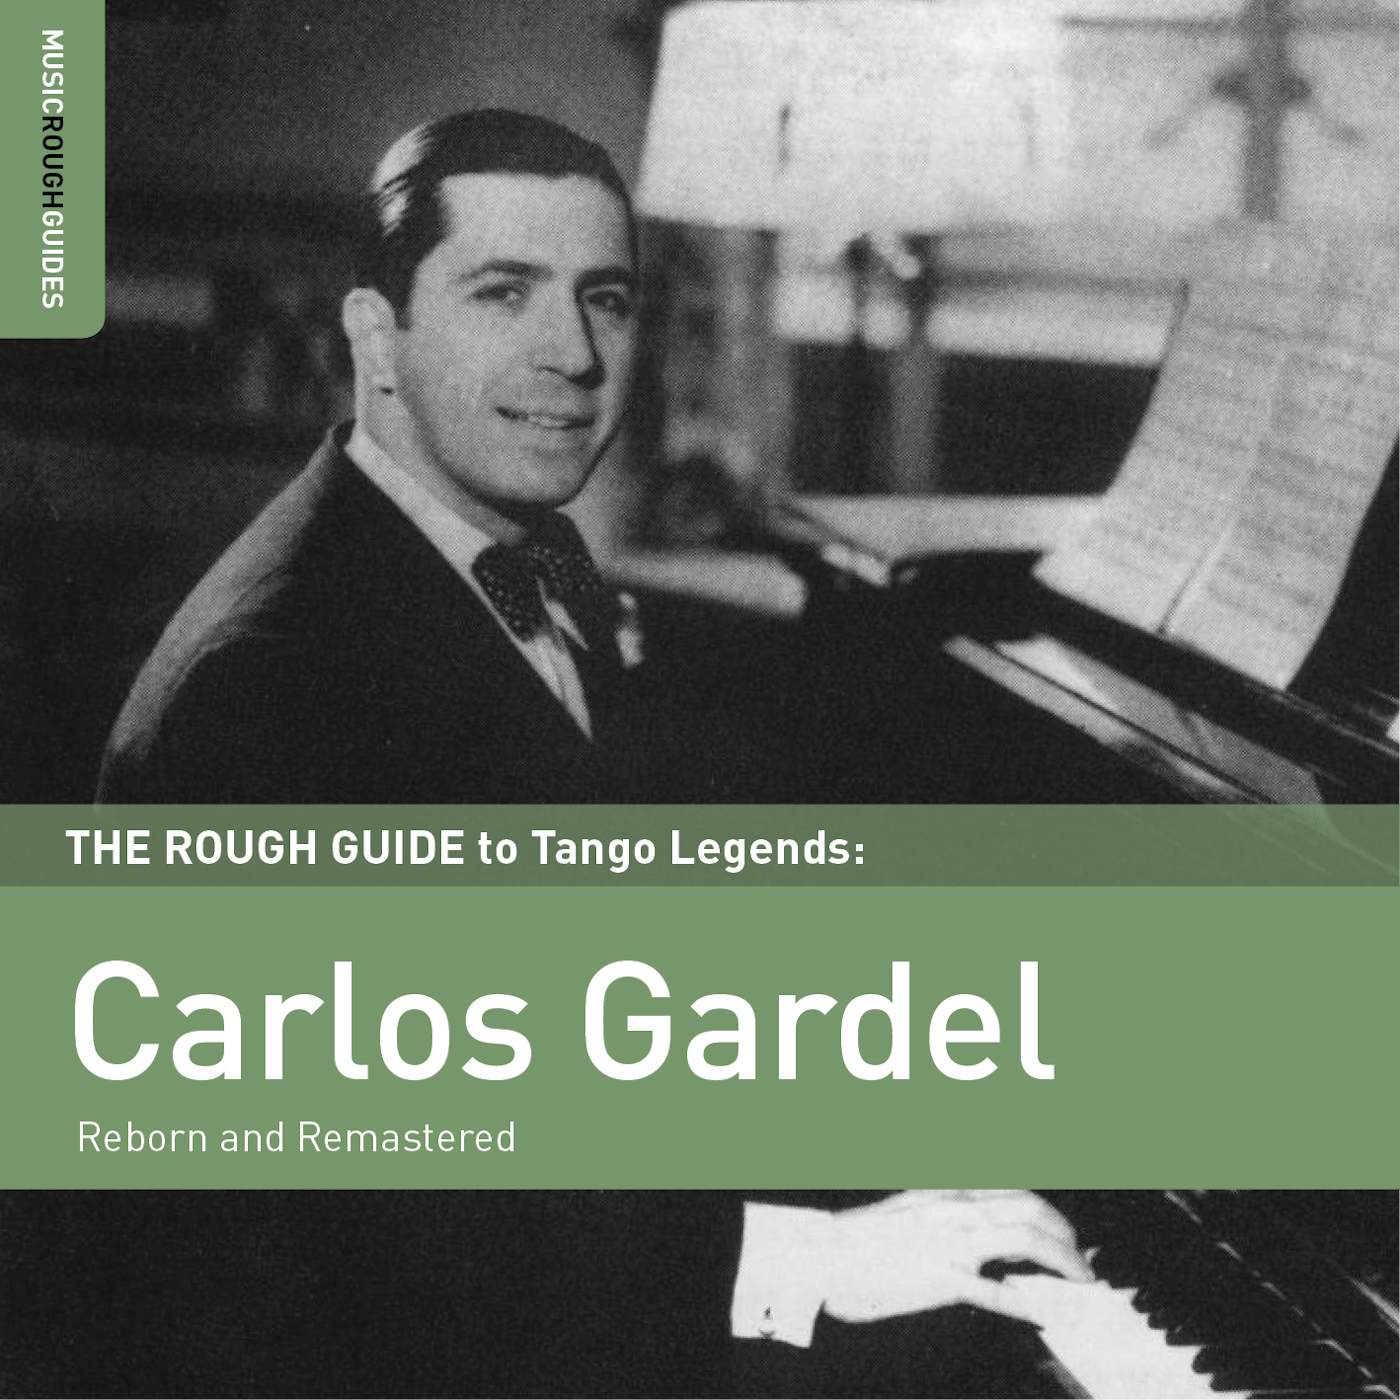 ROUGH GUIDE TO CARLOS GARDEL CD